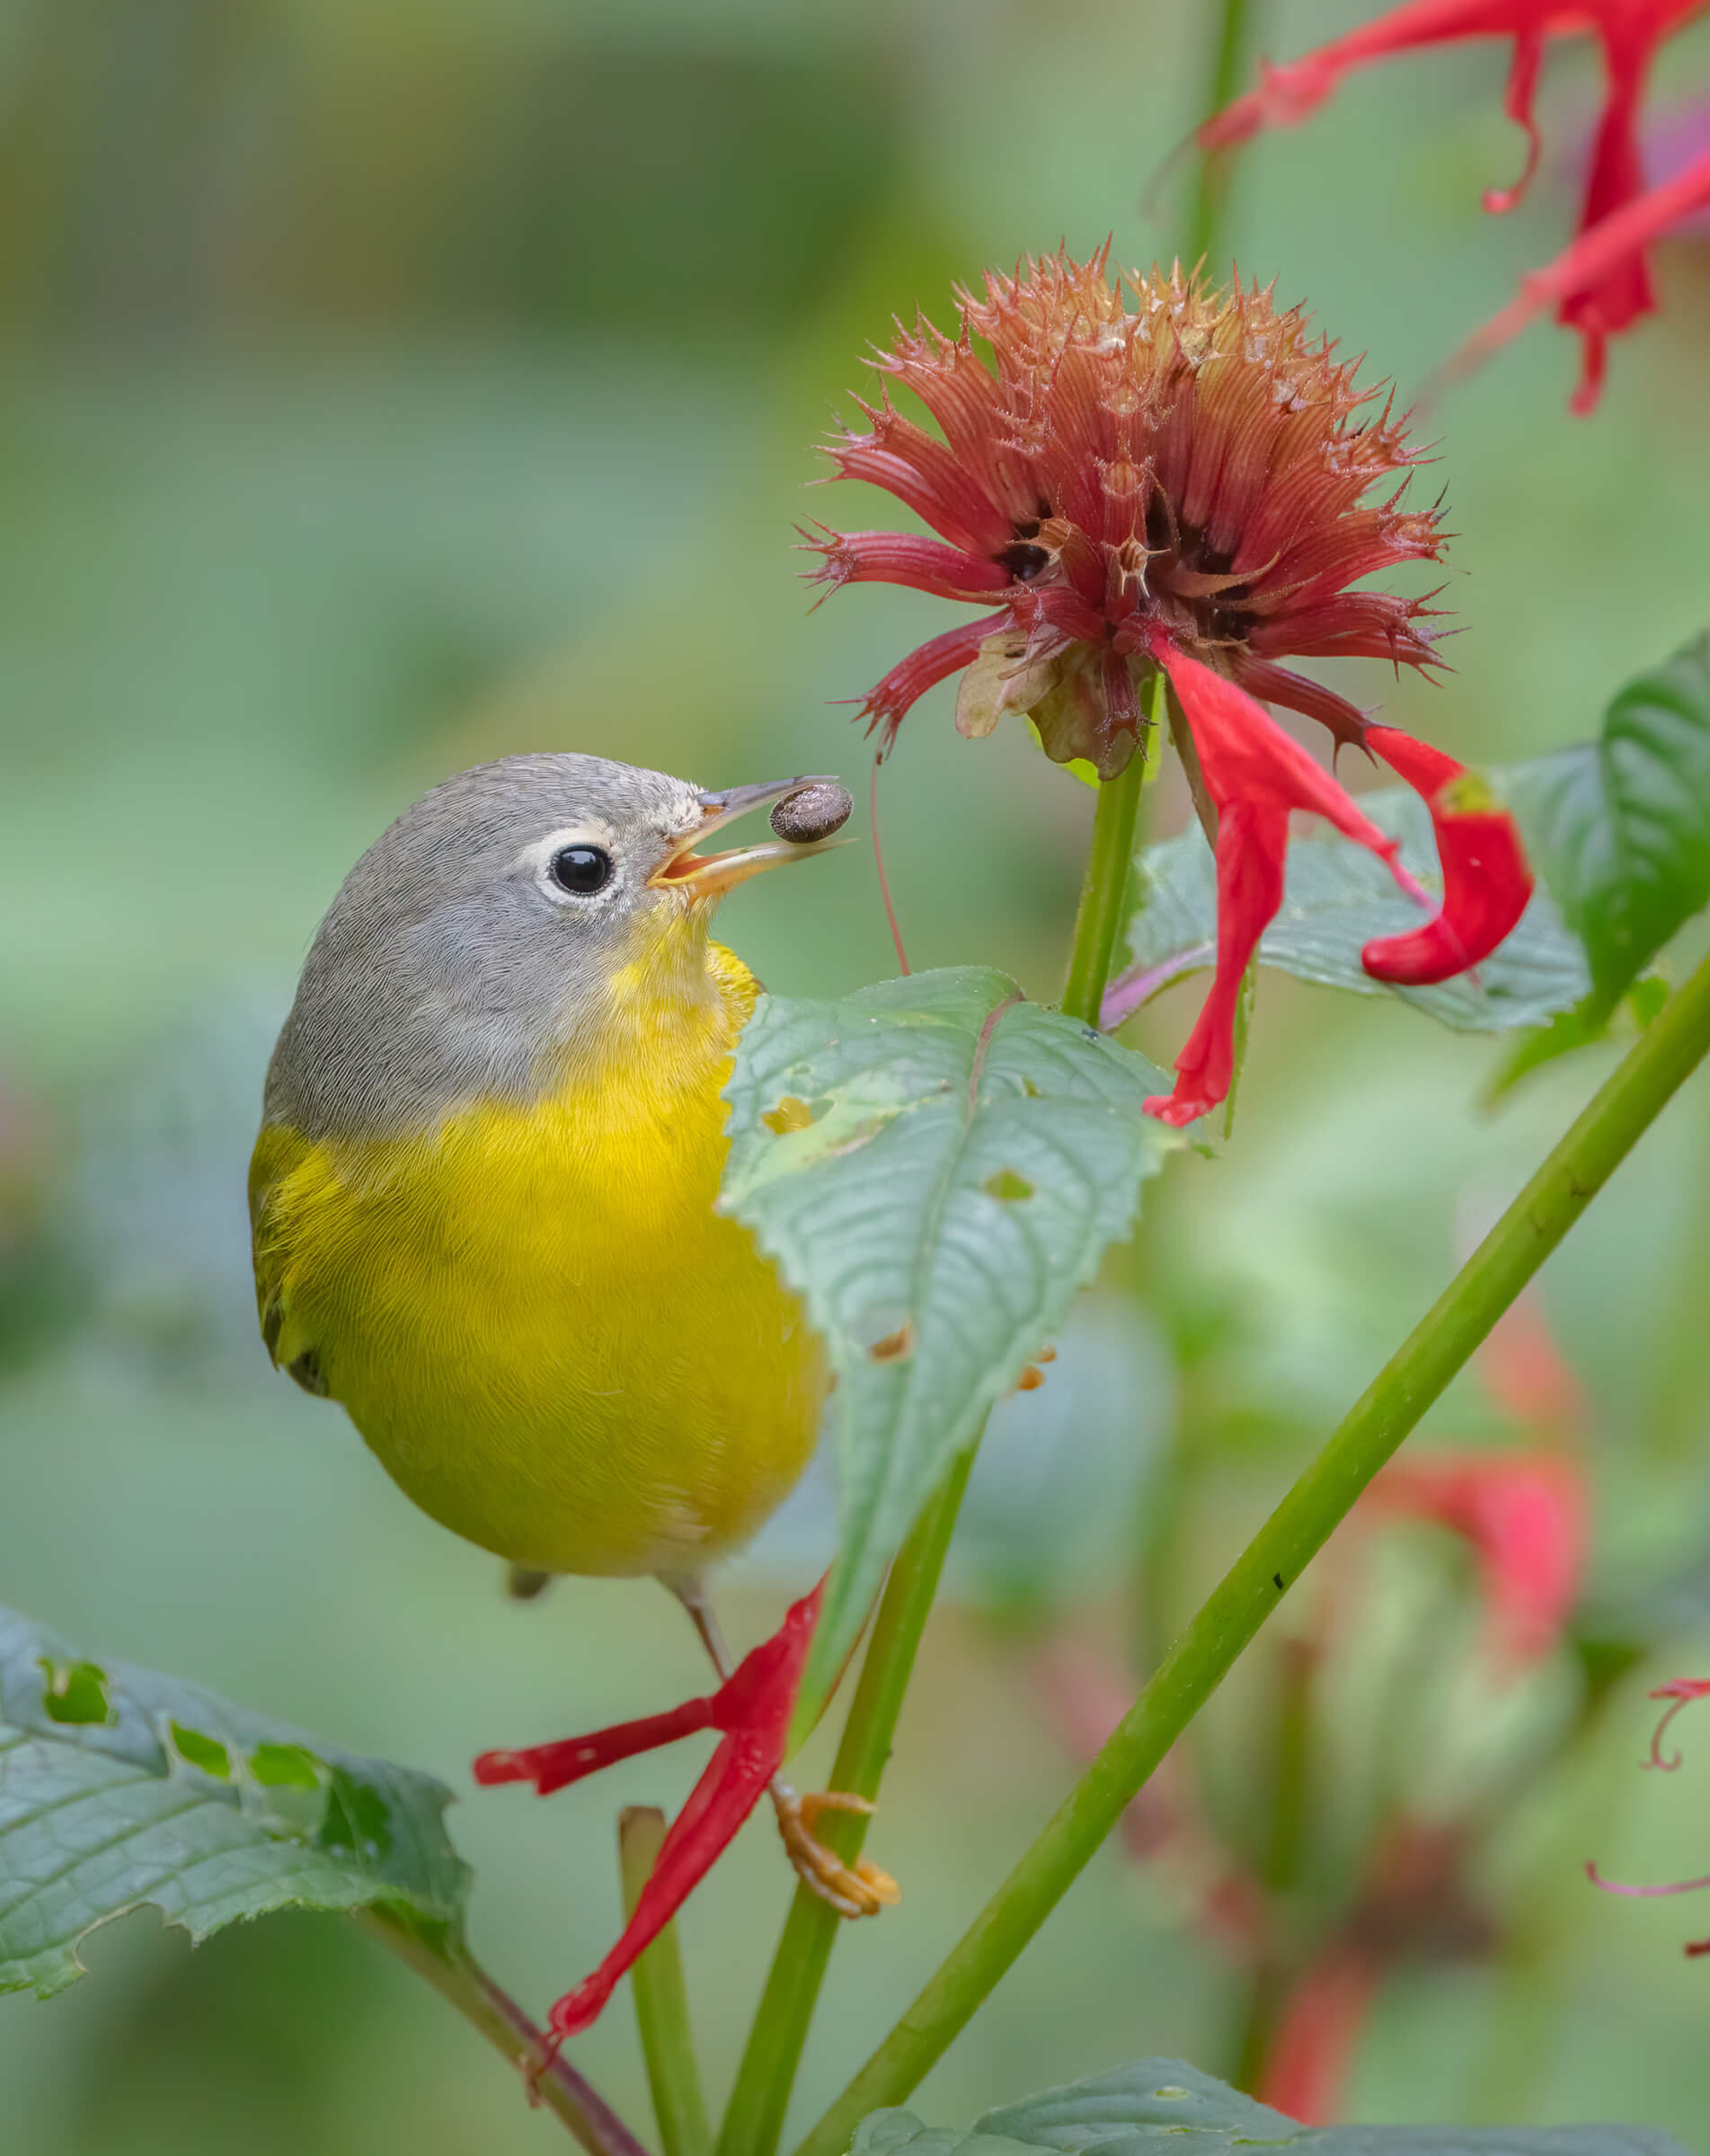 nashville warbler audubon photography awards